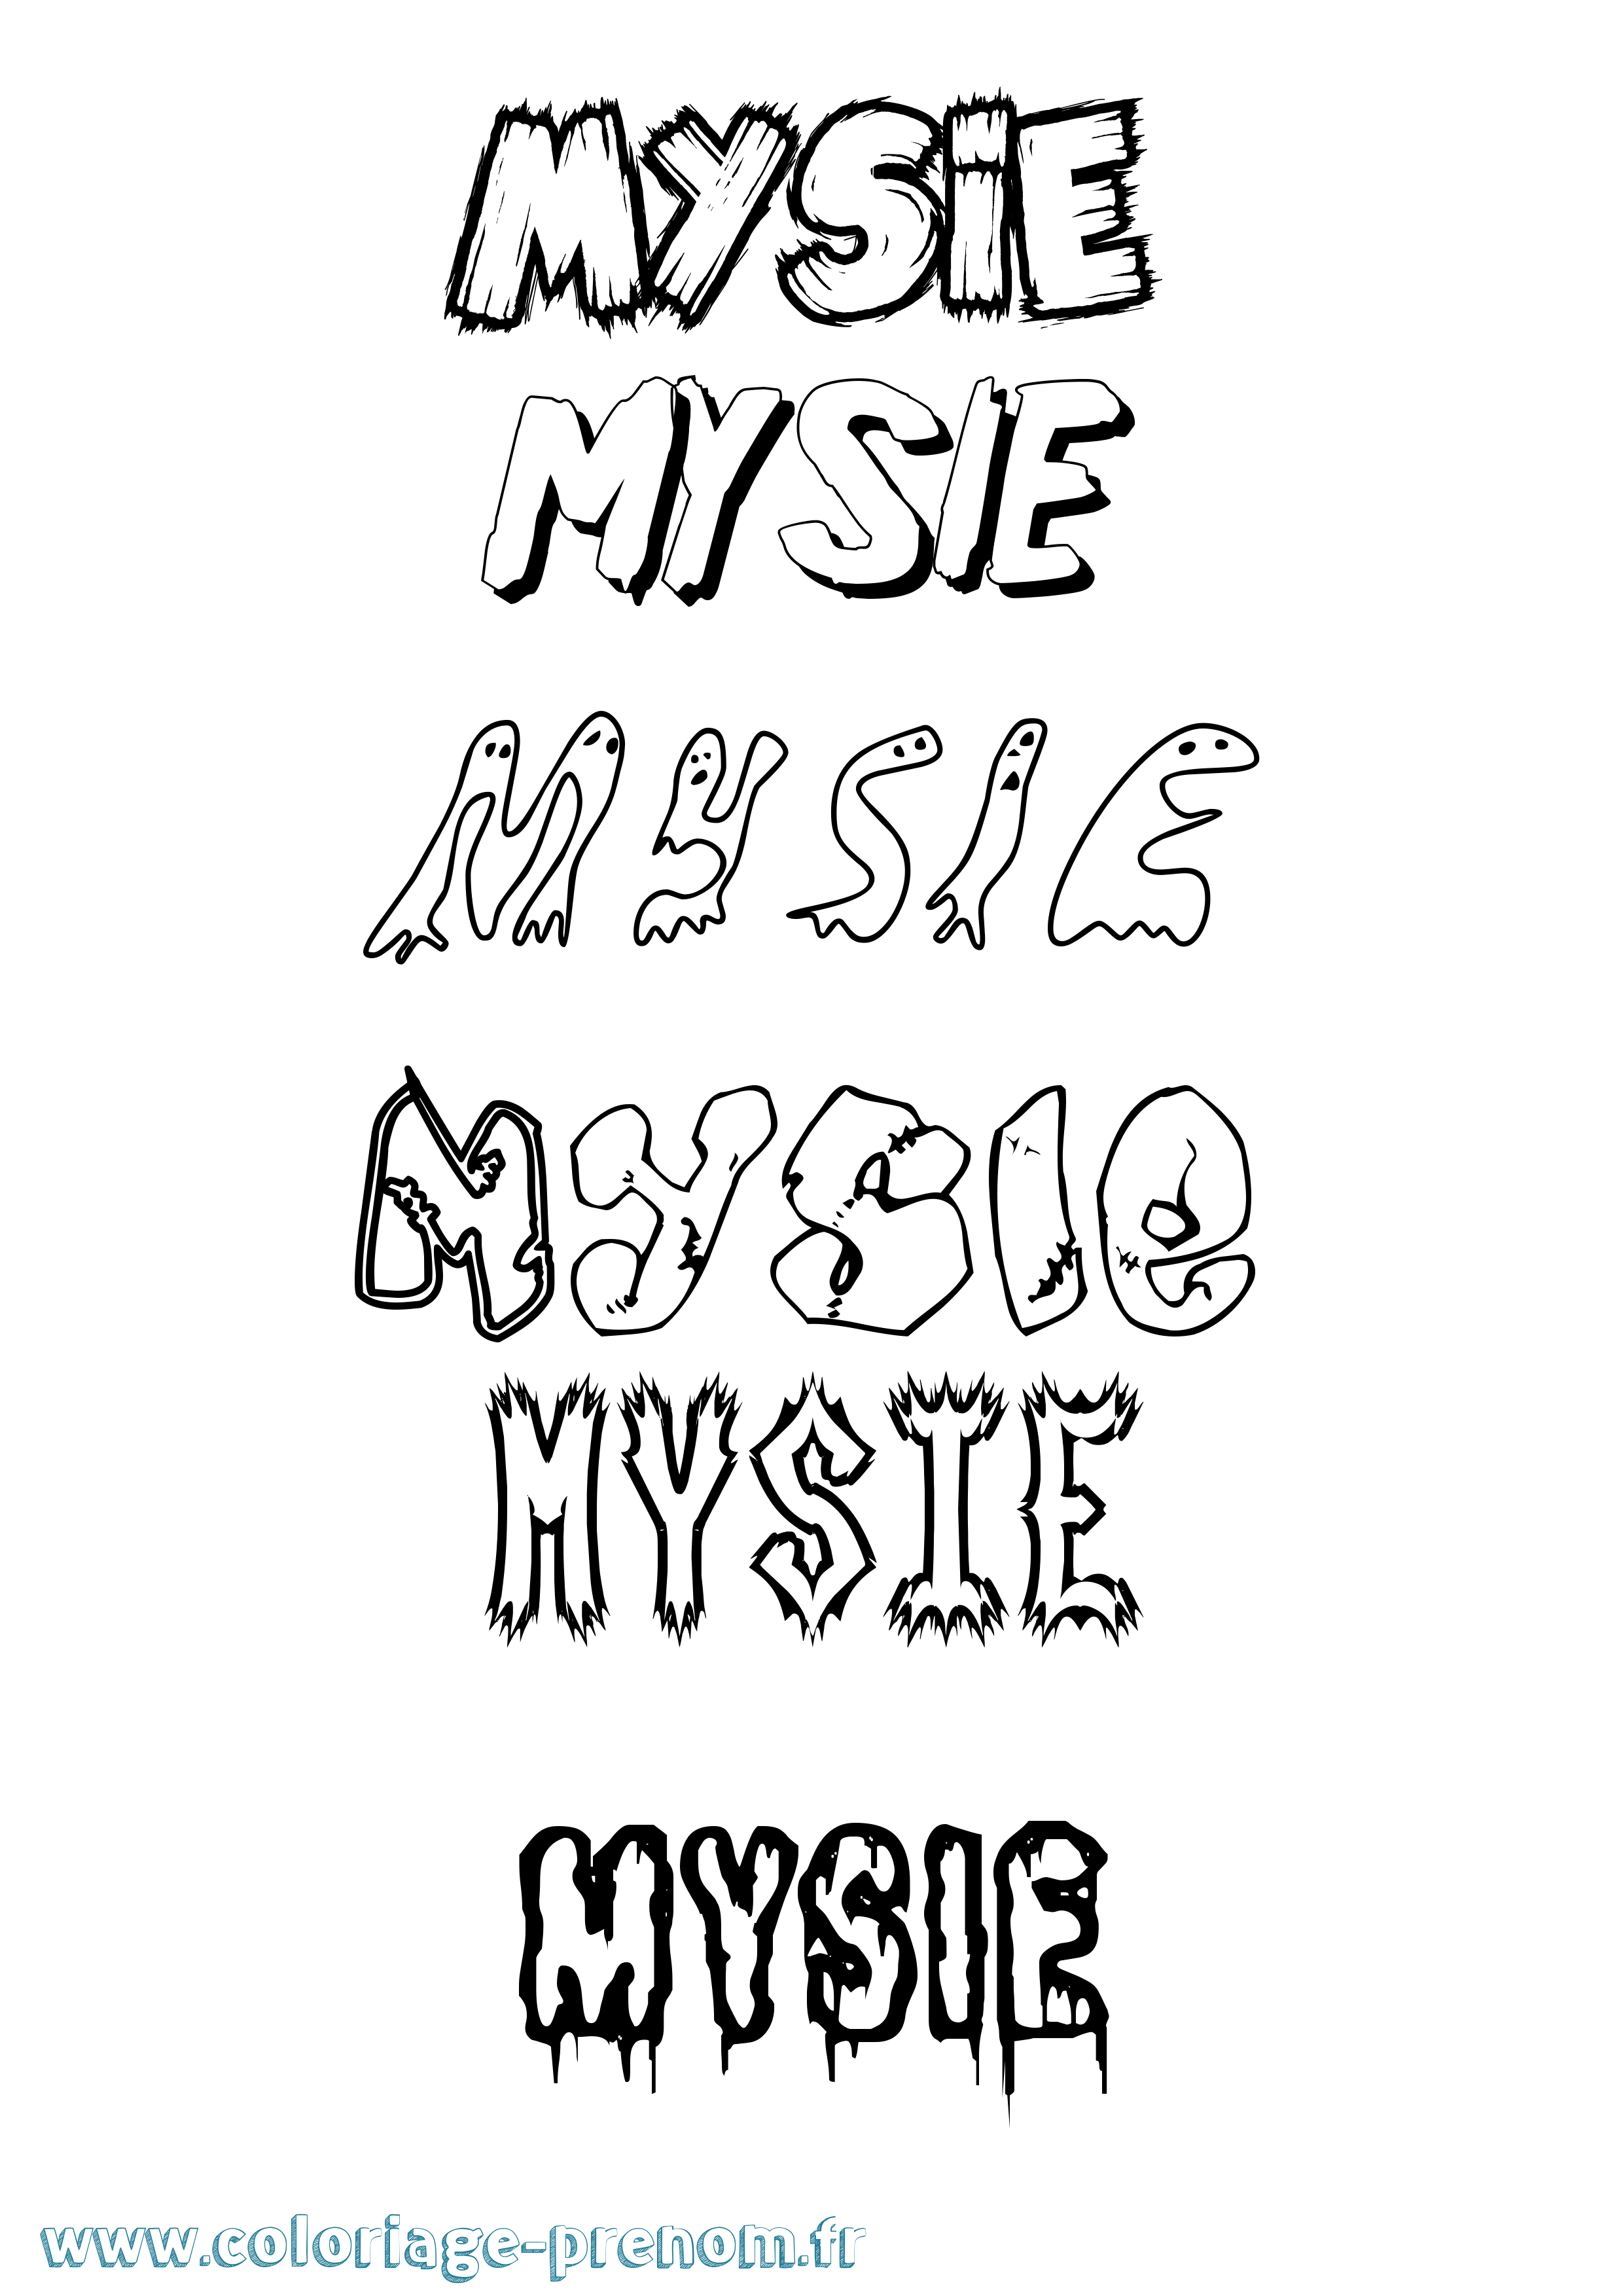 Coloriage prénom Mysie Frisson